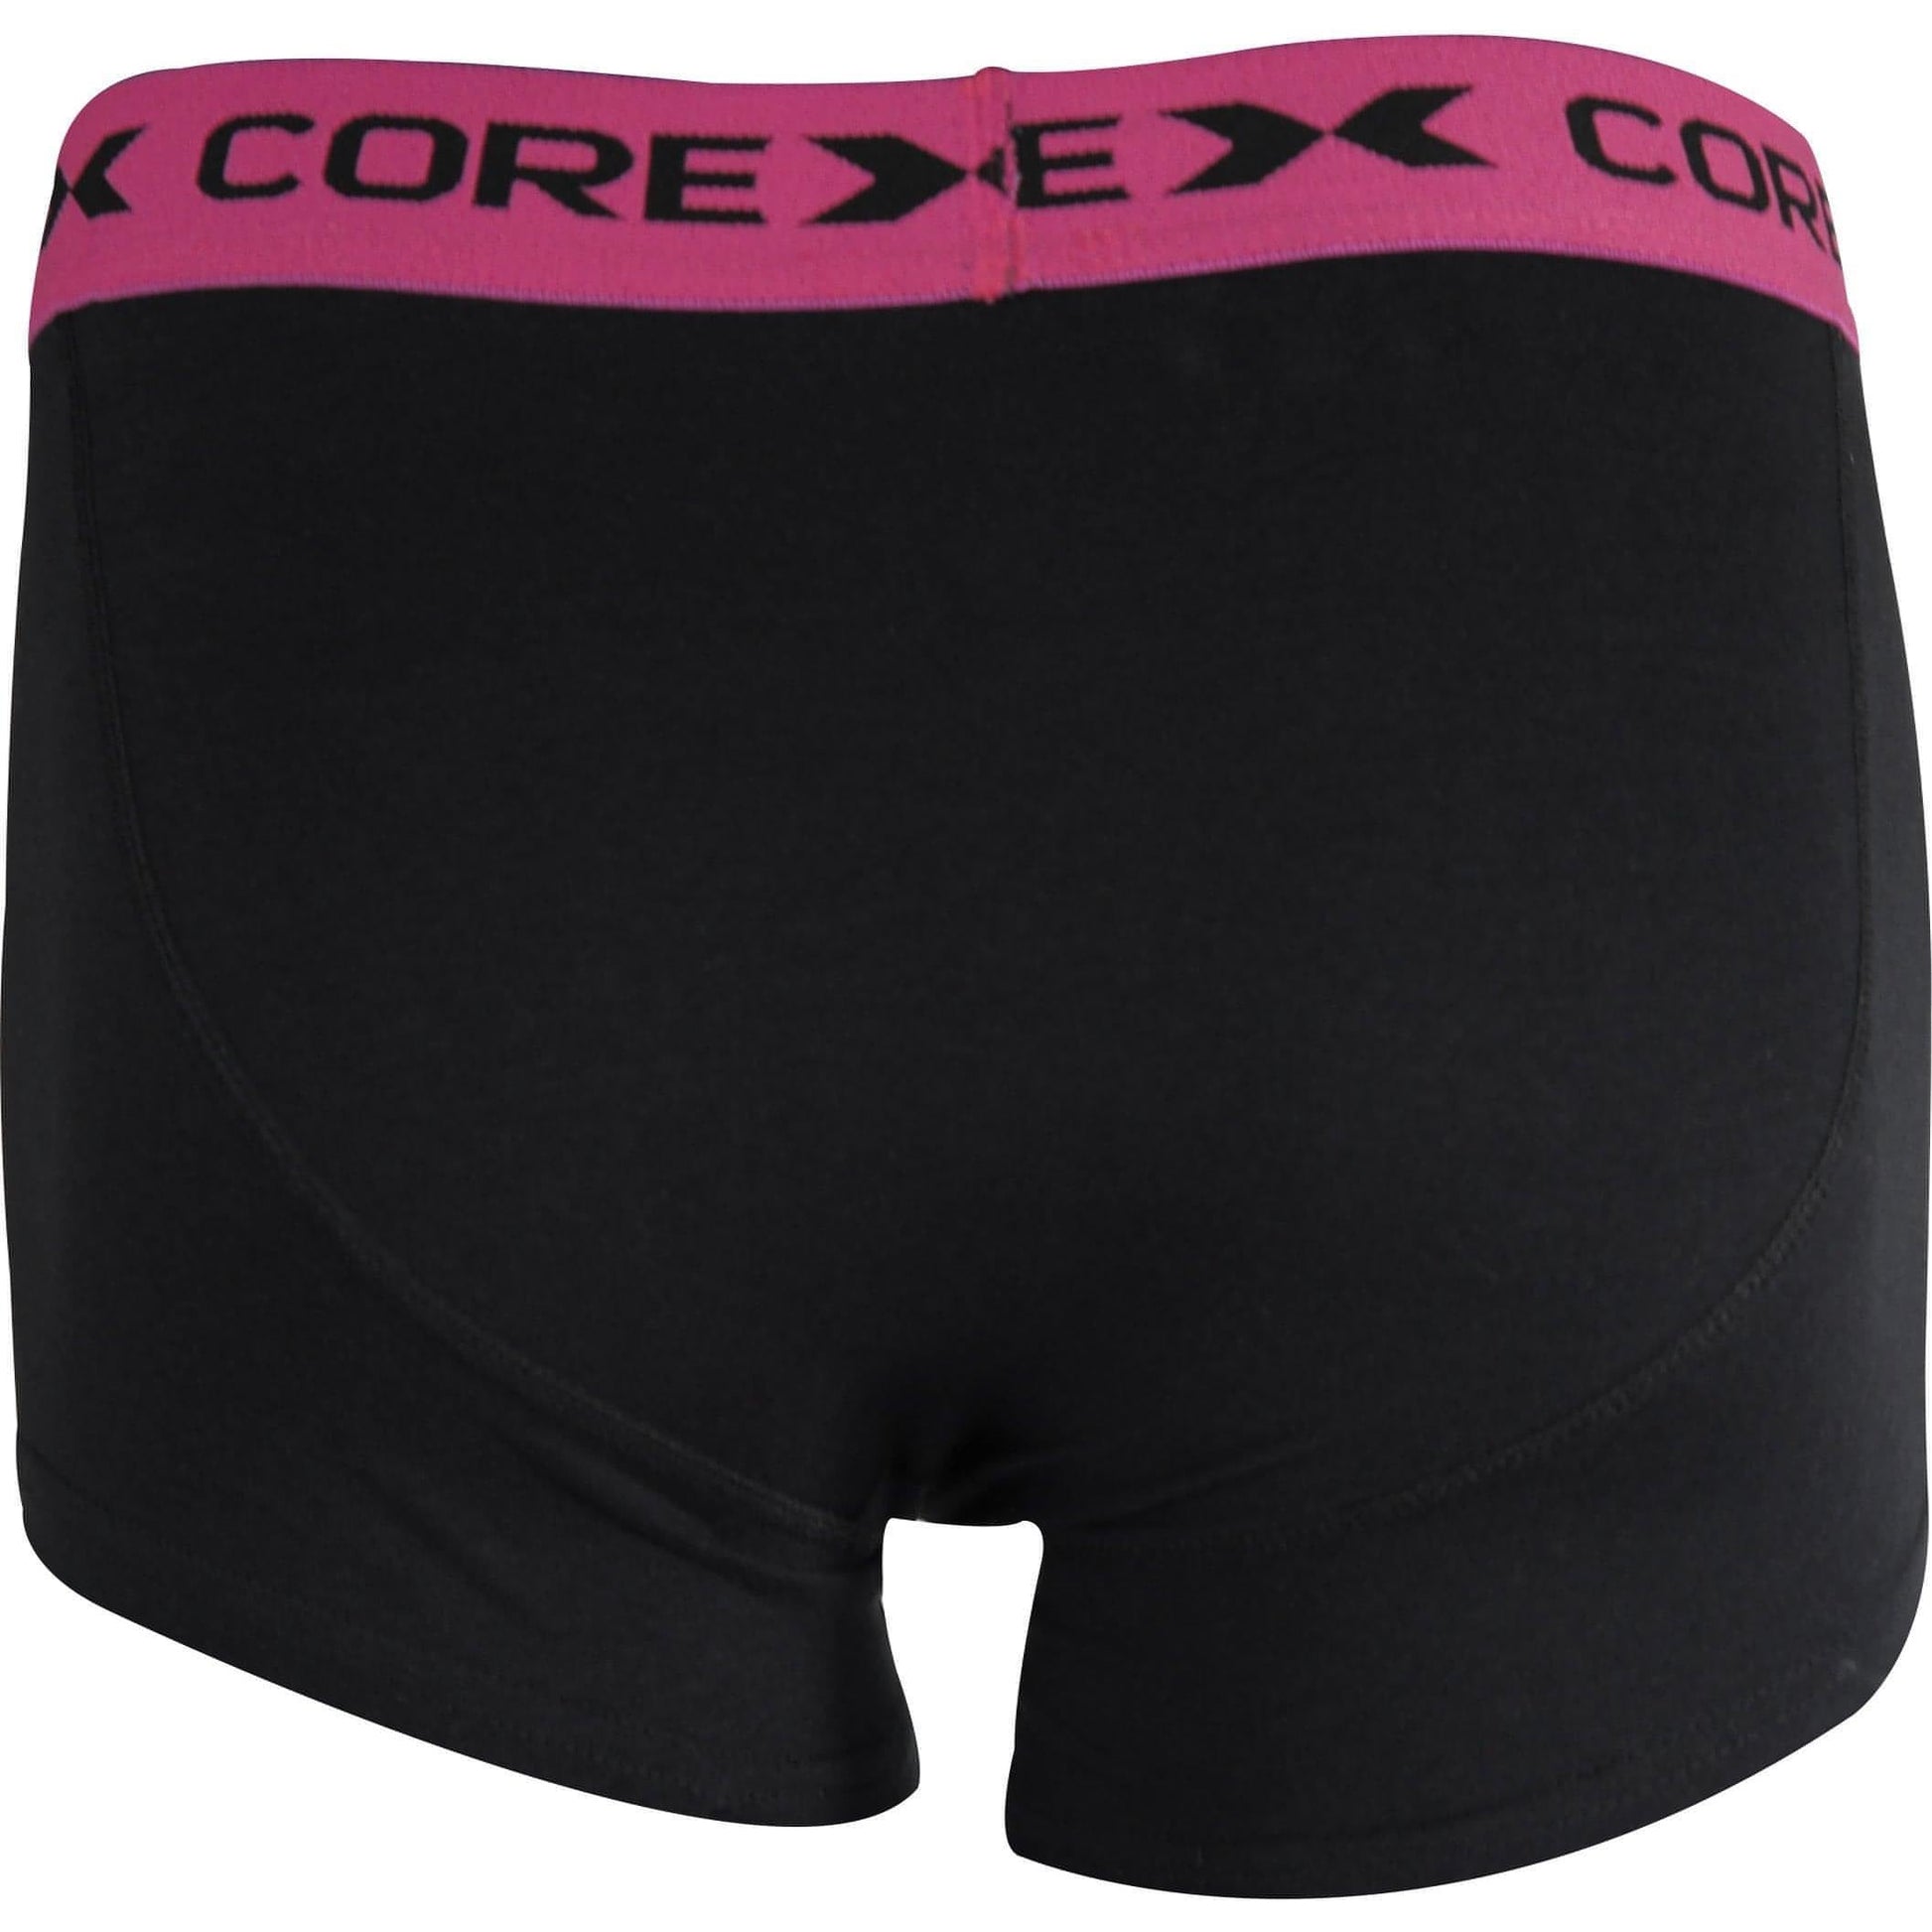 Corex Fitness Classic Pack Boxers 1P204921Wm Raspberrymint Raspberry Back View